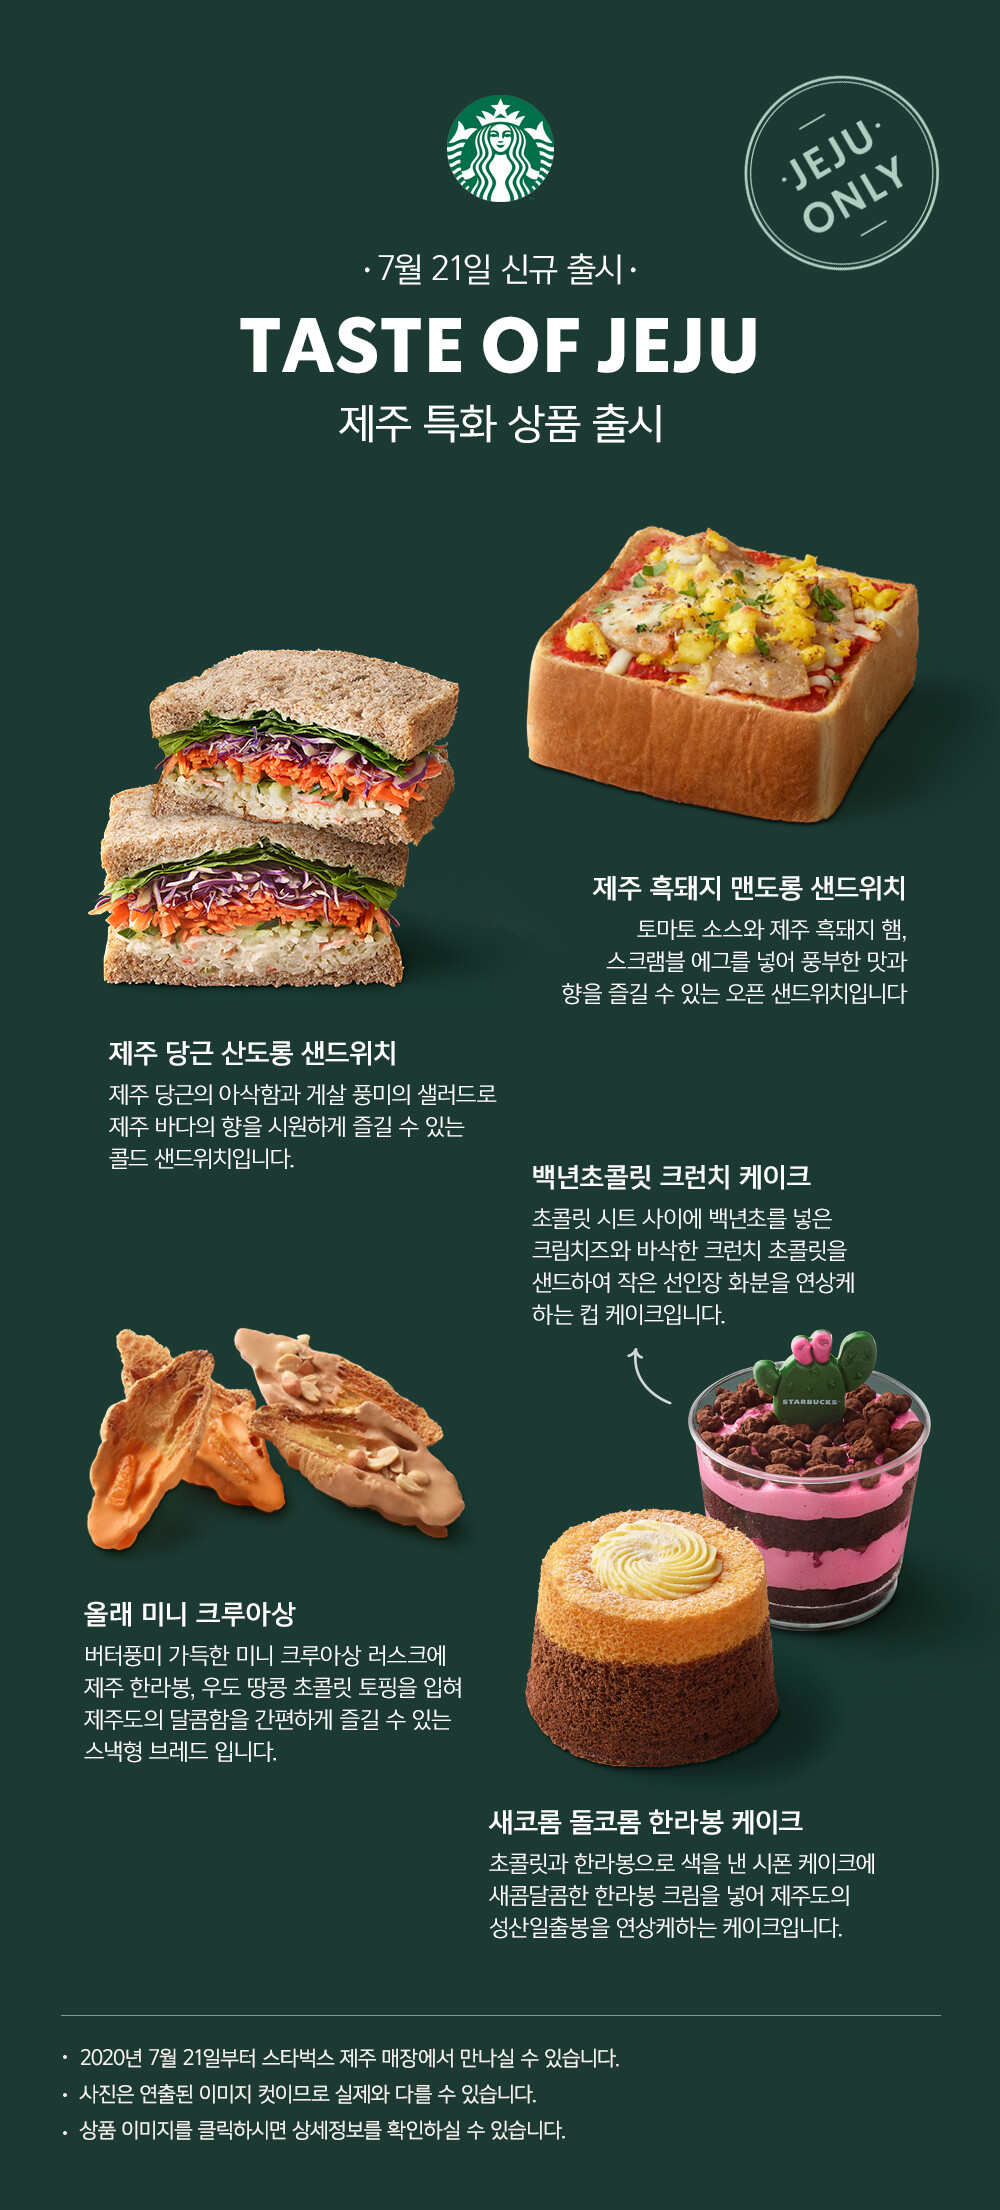 Starbucks Jeju Starlight Apple - Jeju exclusive menu